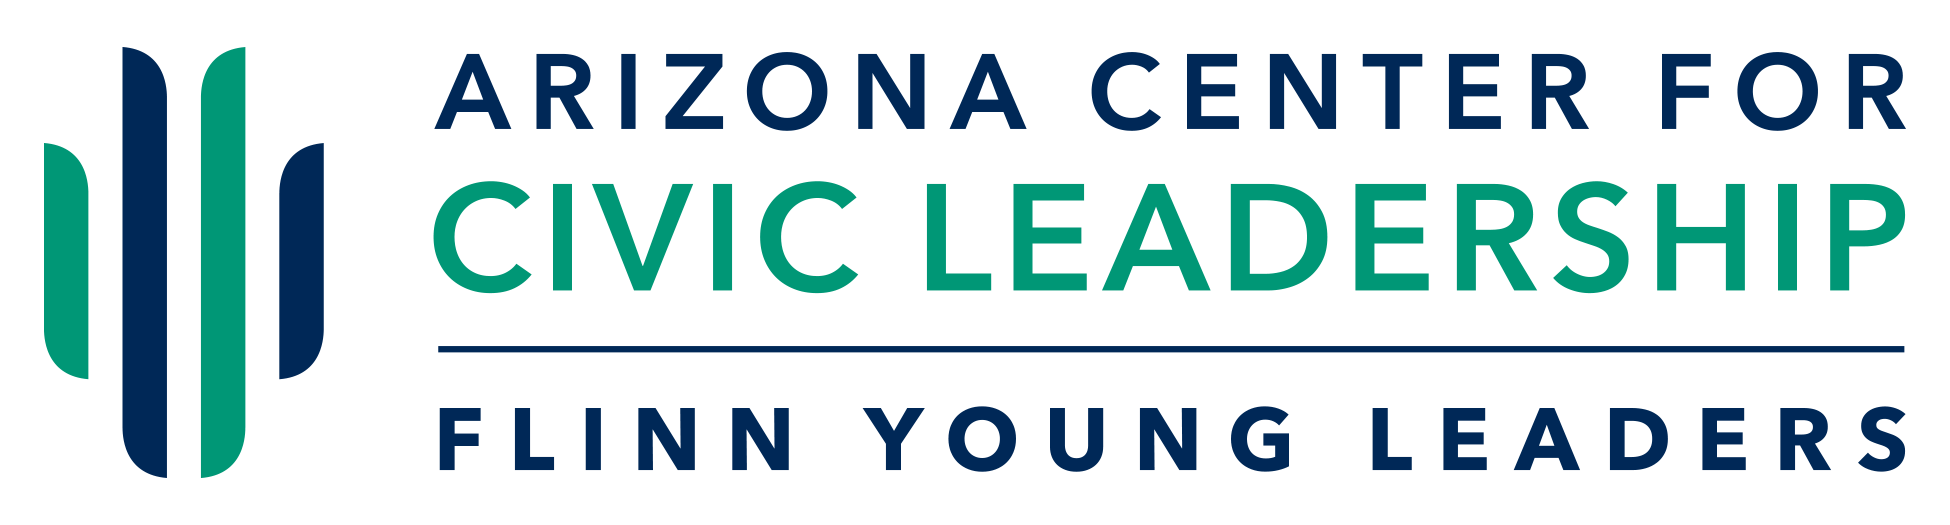 Flinn Young Leaders logo